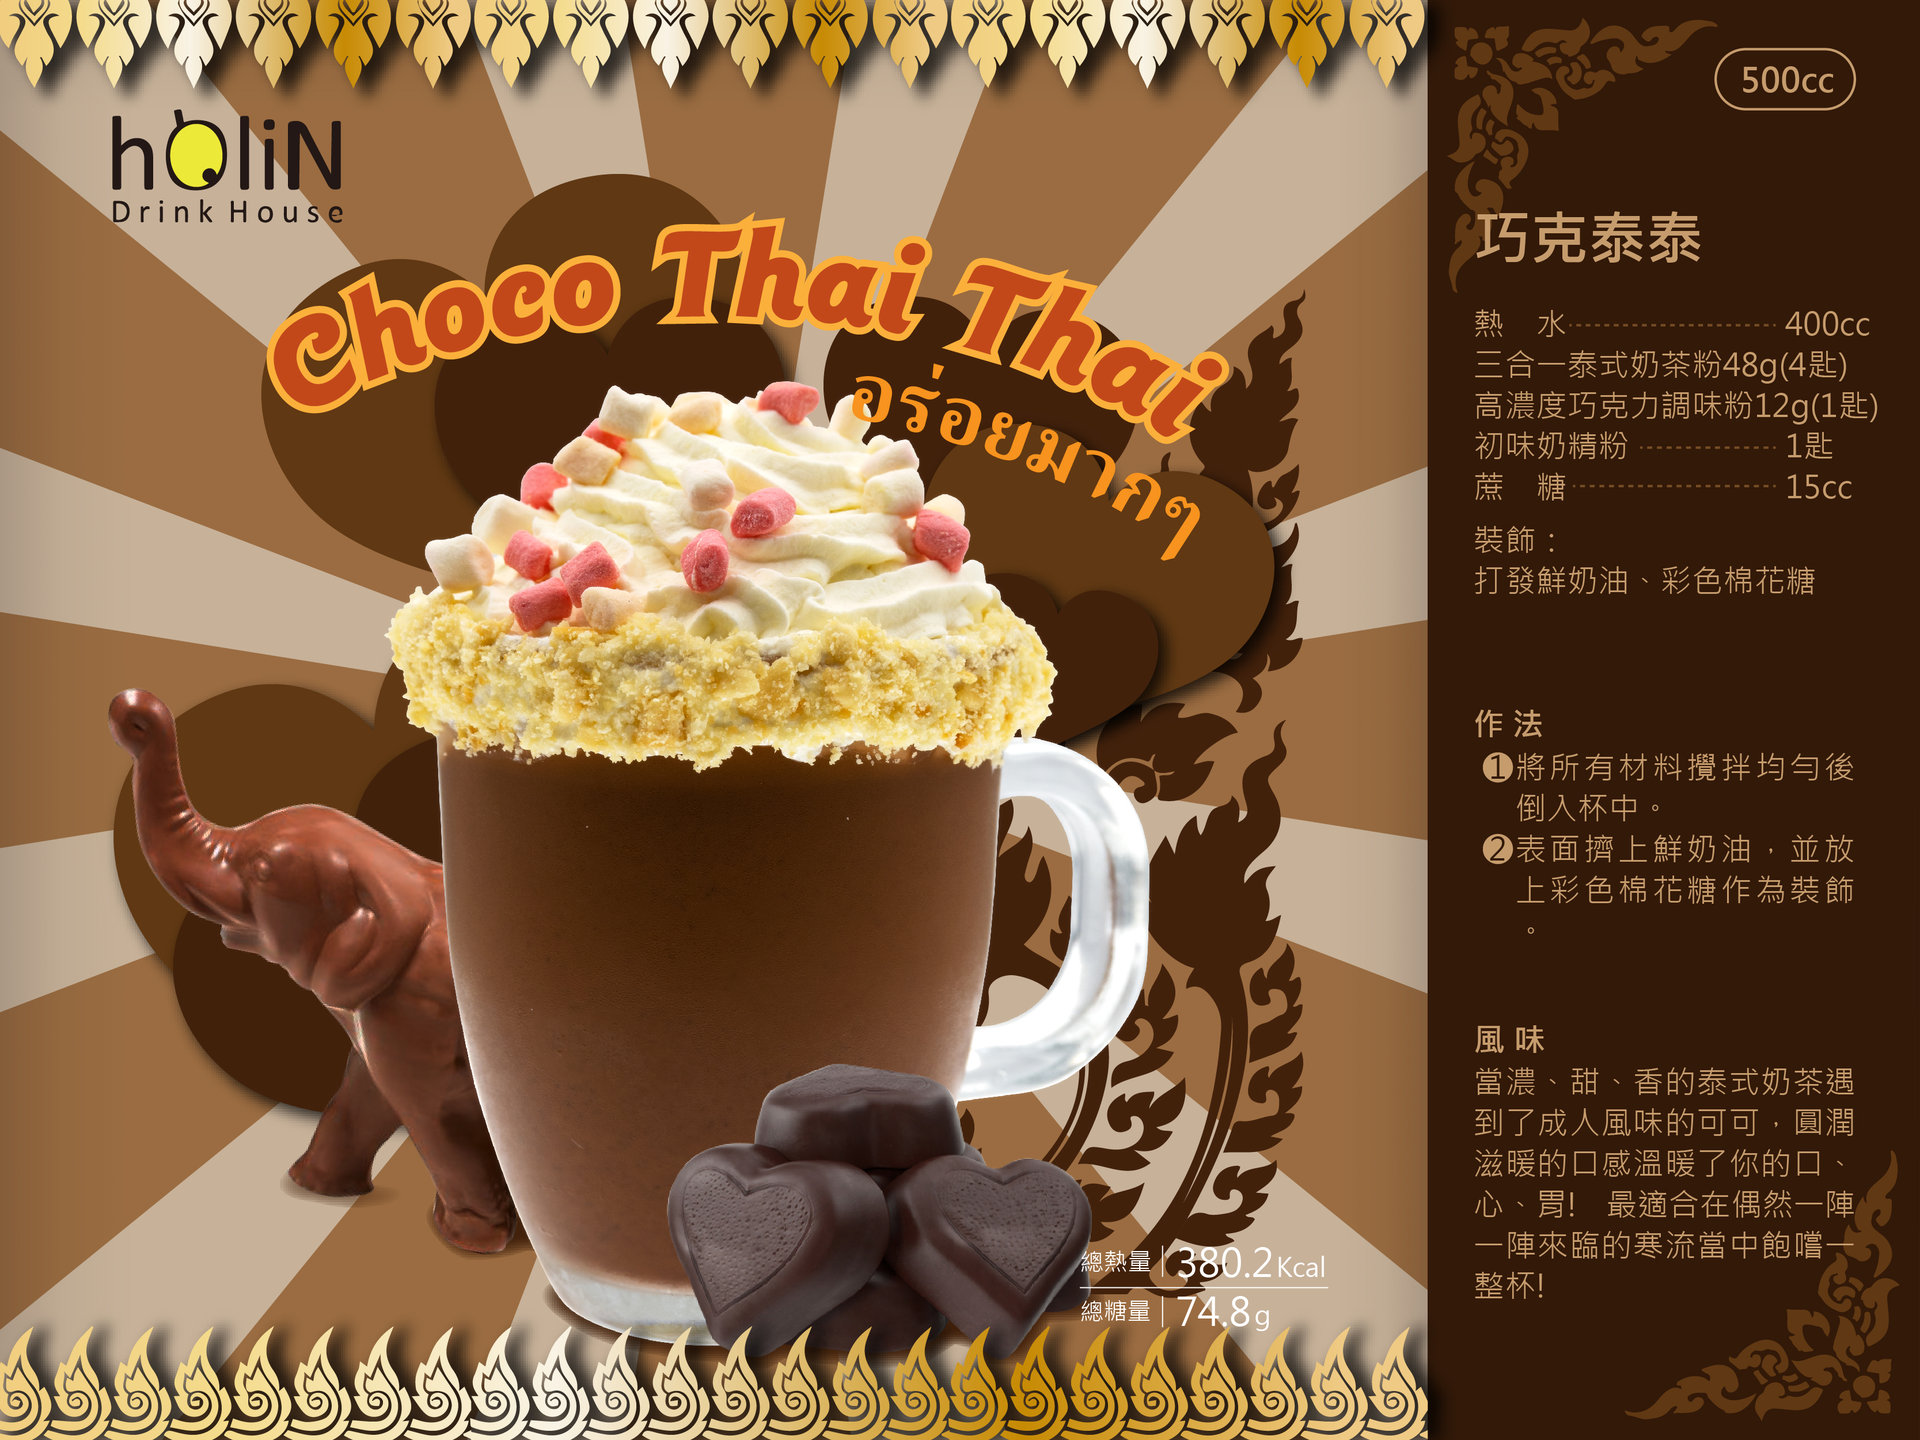 Choco Thai Thai - tapiocapearls,Chocolate Drink Powder,Thai Milk Tea,sucrose,Non-Dairy Creamer,bubbletea,boba